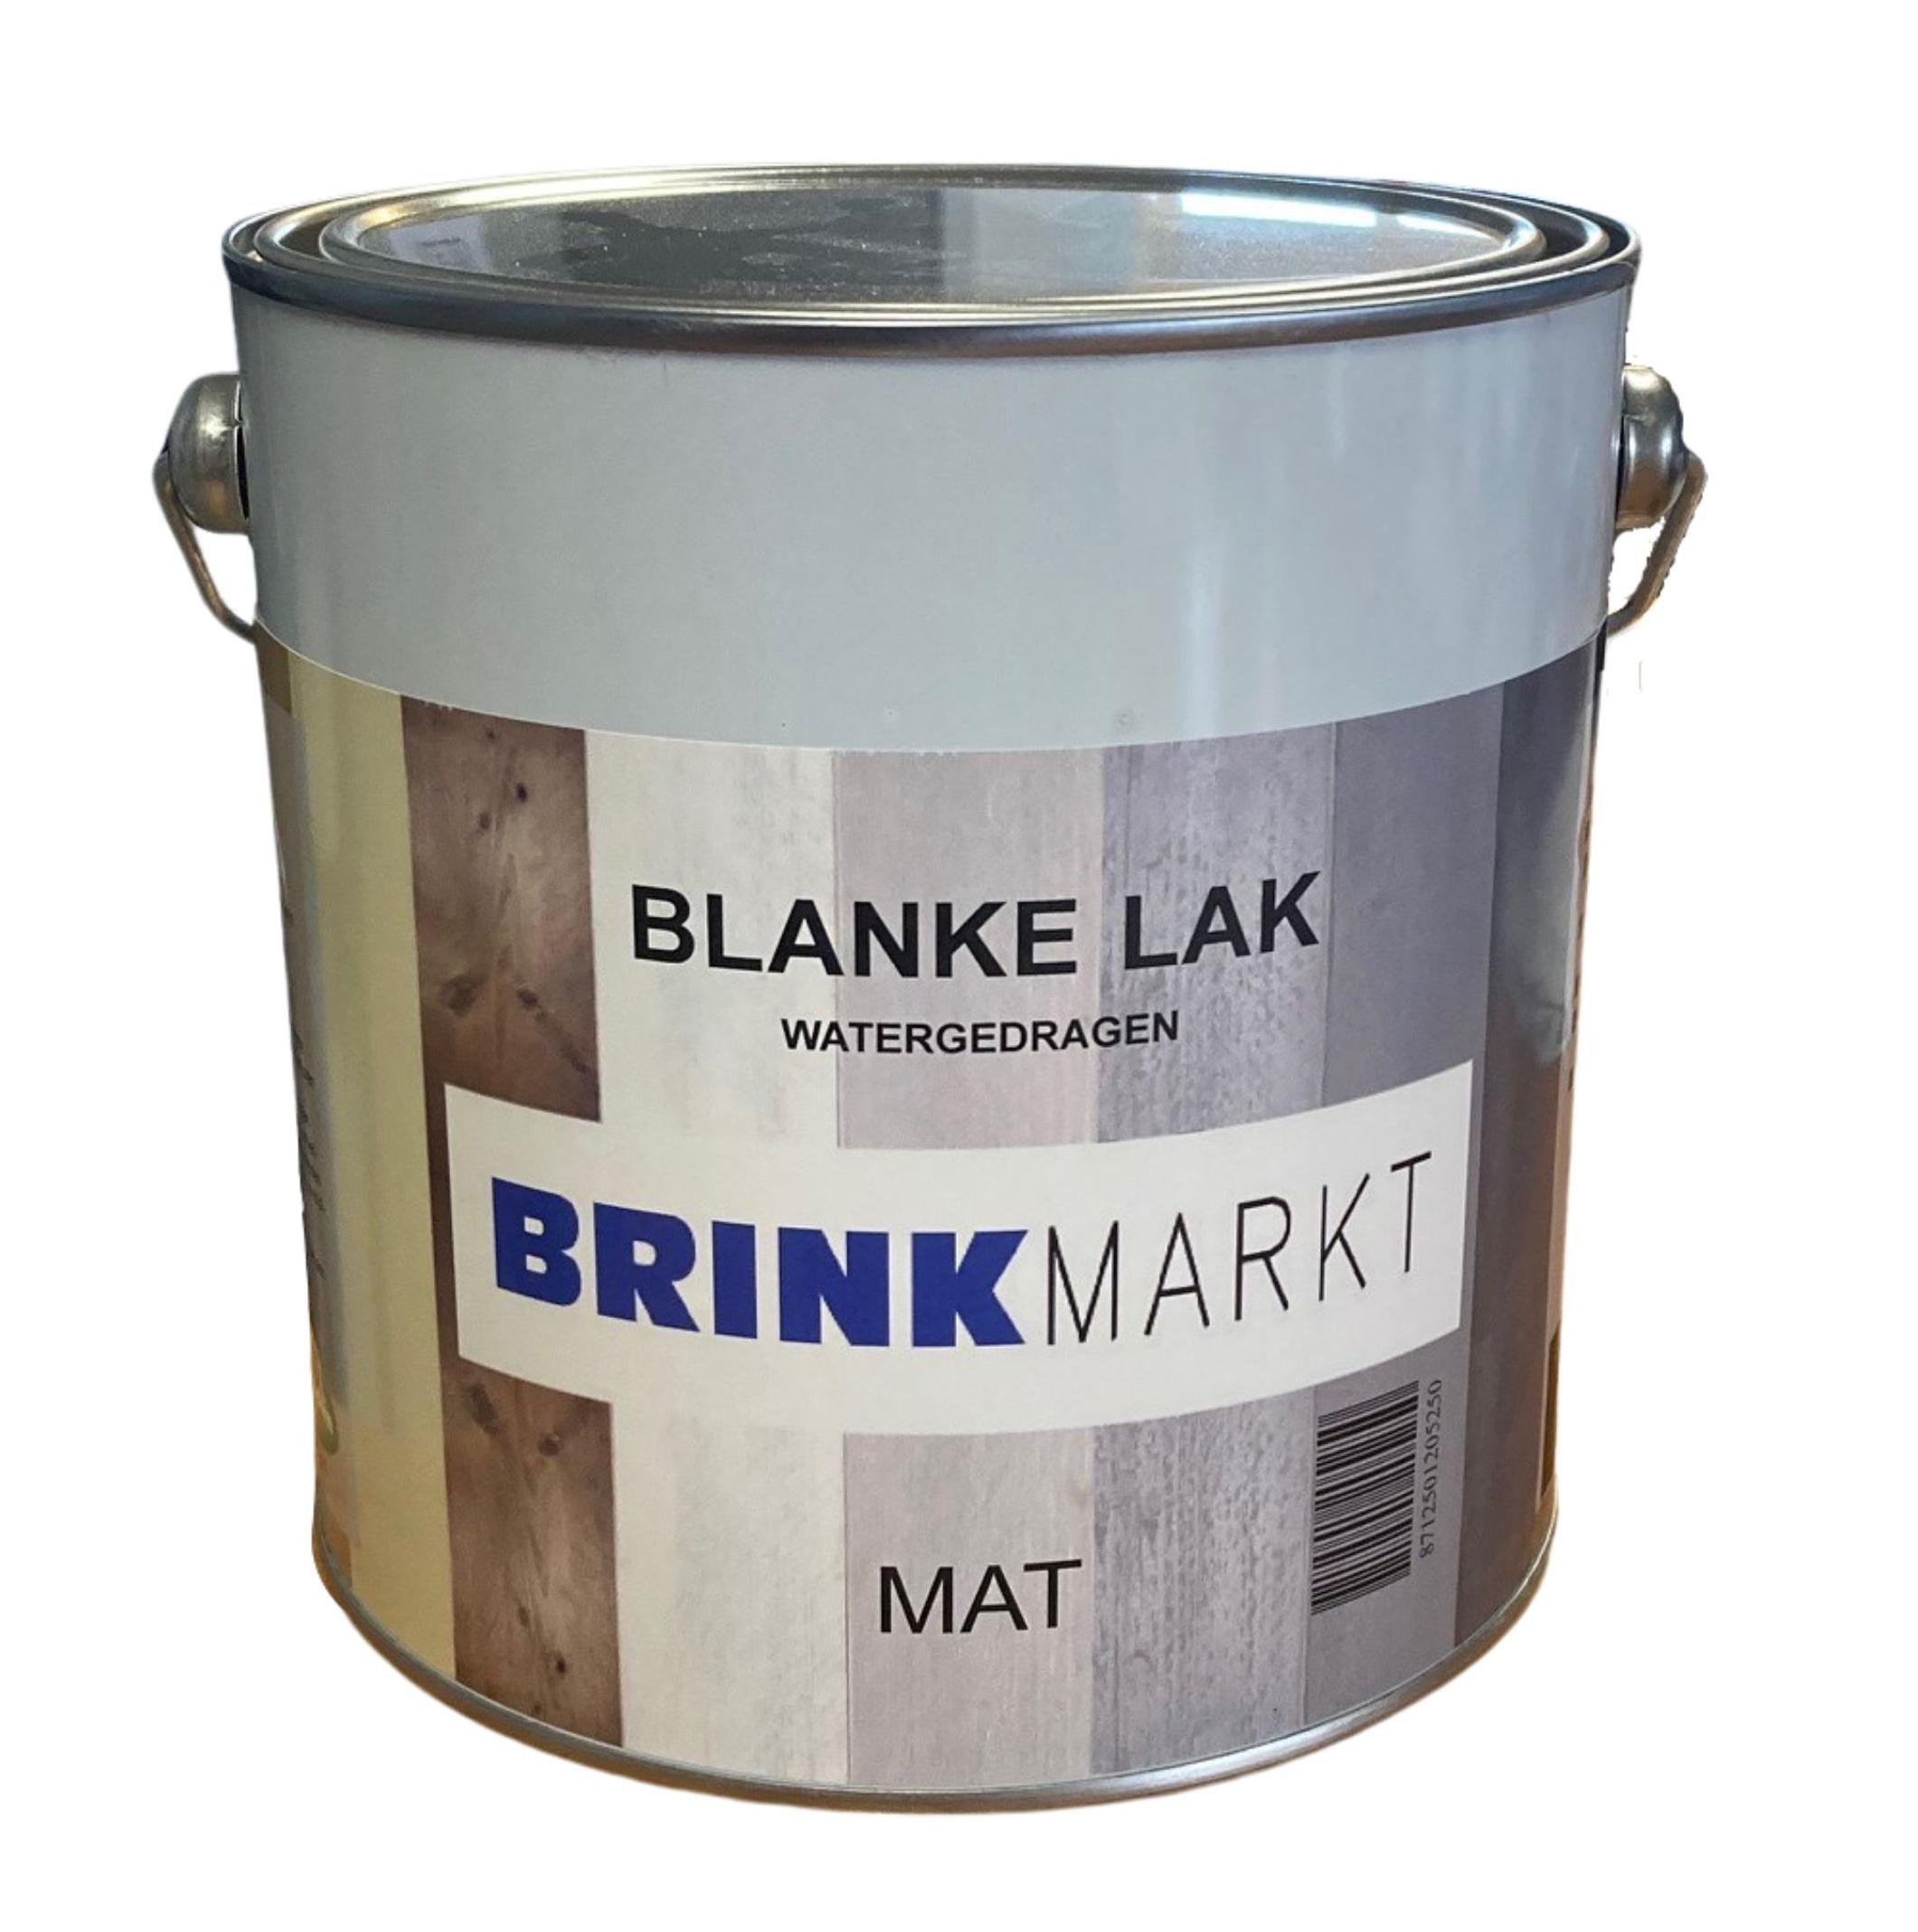 BM Blanke lak 2,5 Ltr watergedragen | BRINKmarkt.nl